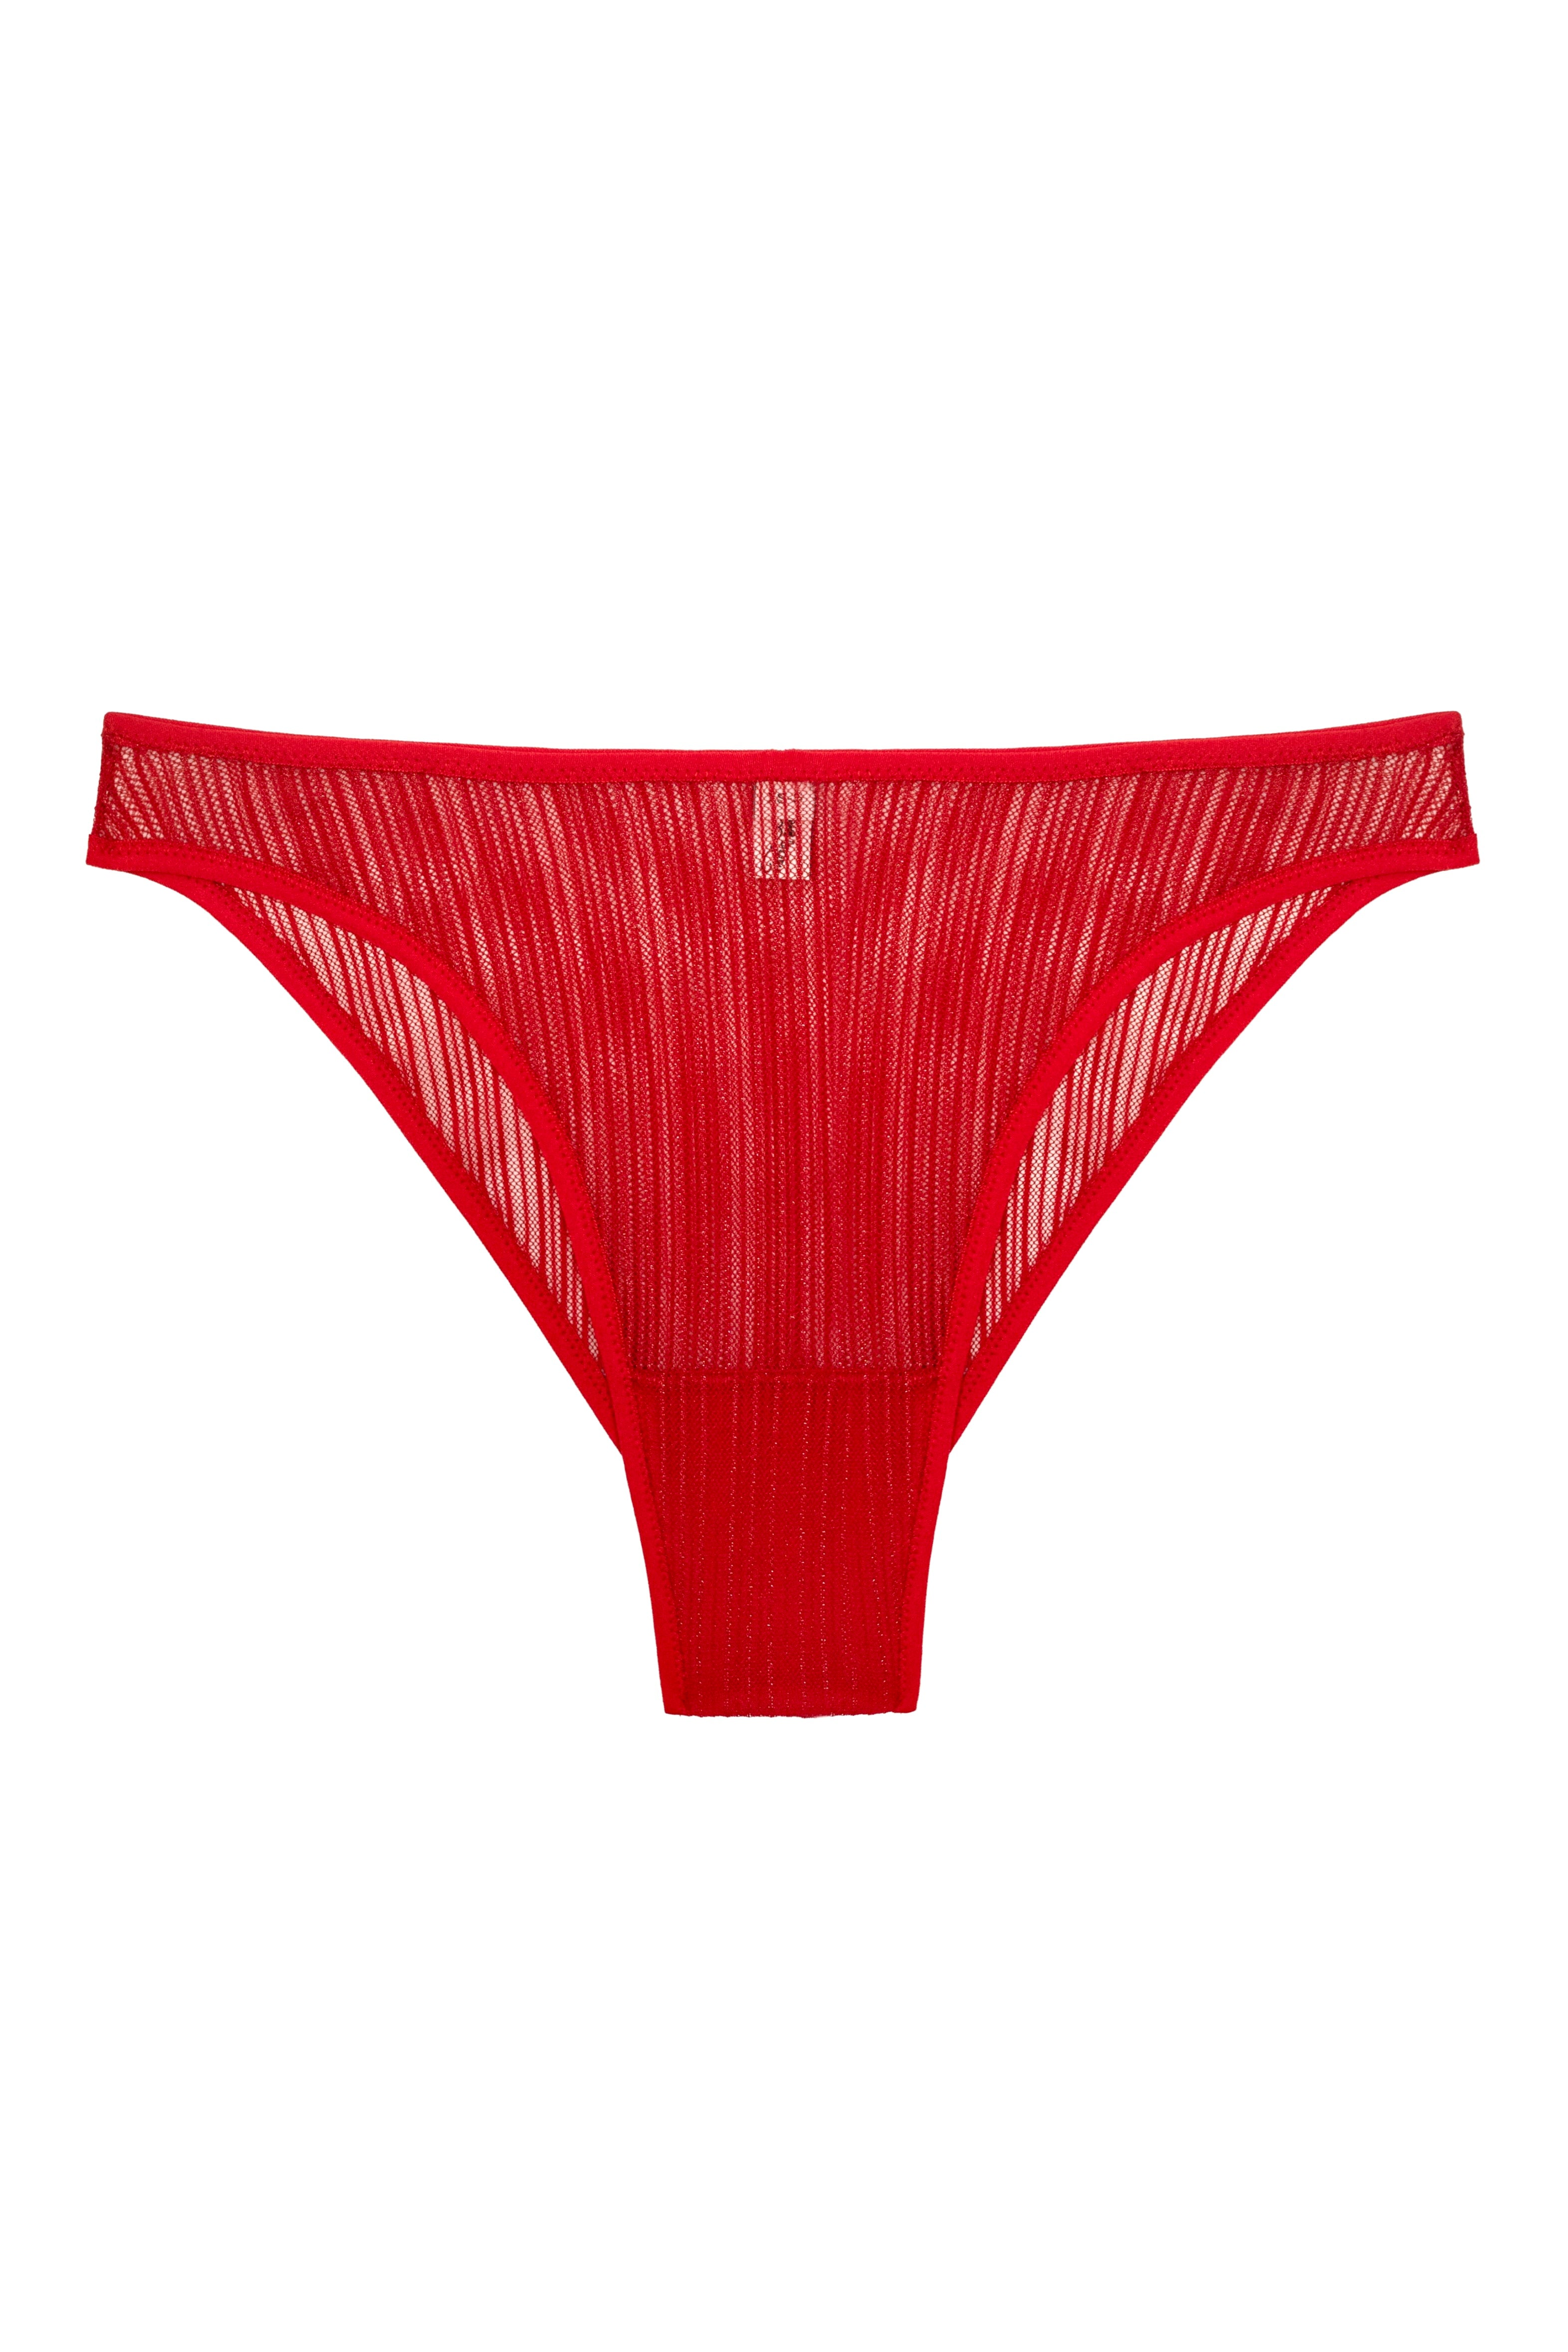 Lessie Red Slip Panties Yesundress Reviews On Judgeme